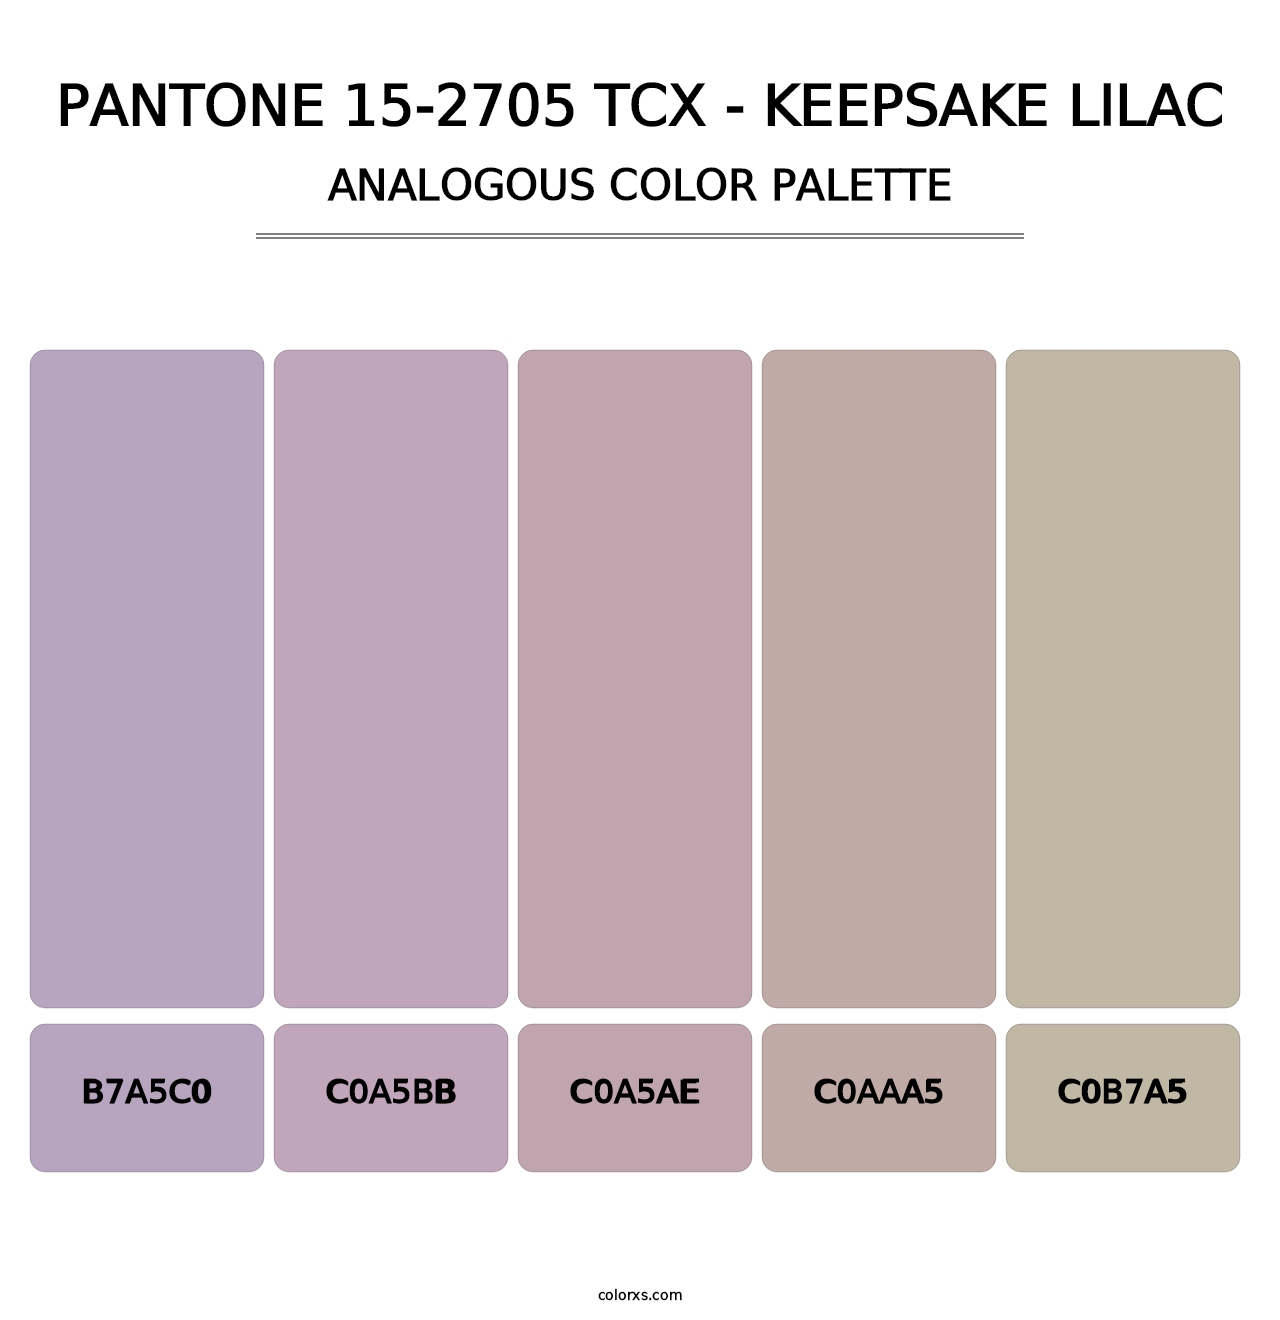 PANTONE 15-2705 TCX - Keepsake Lilac - Analogous Color Palette